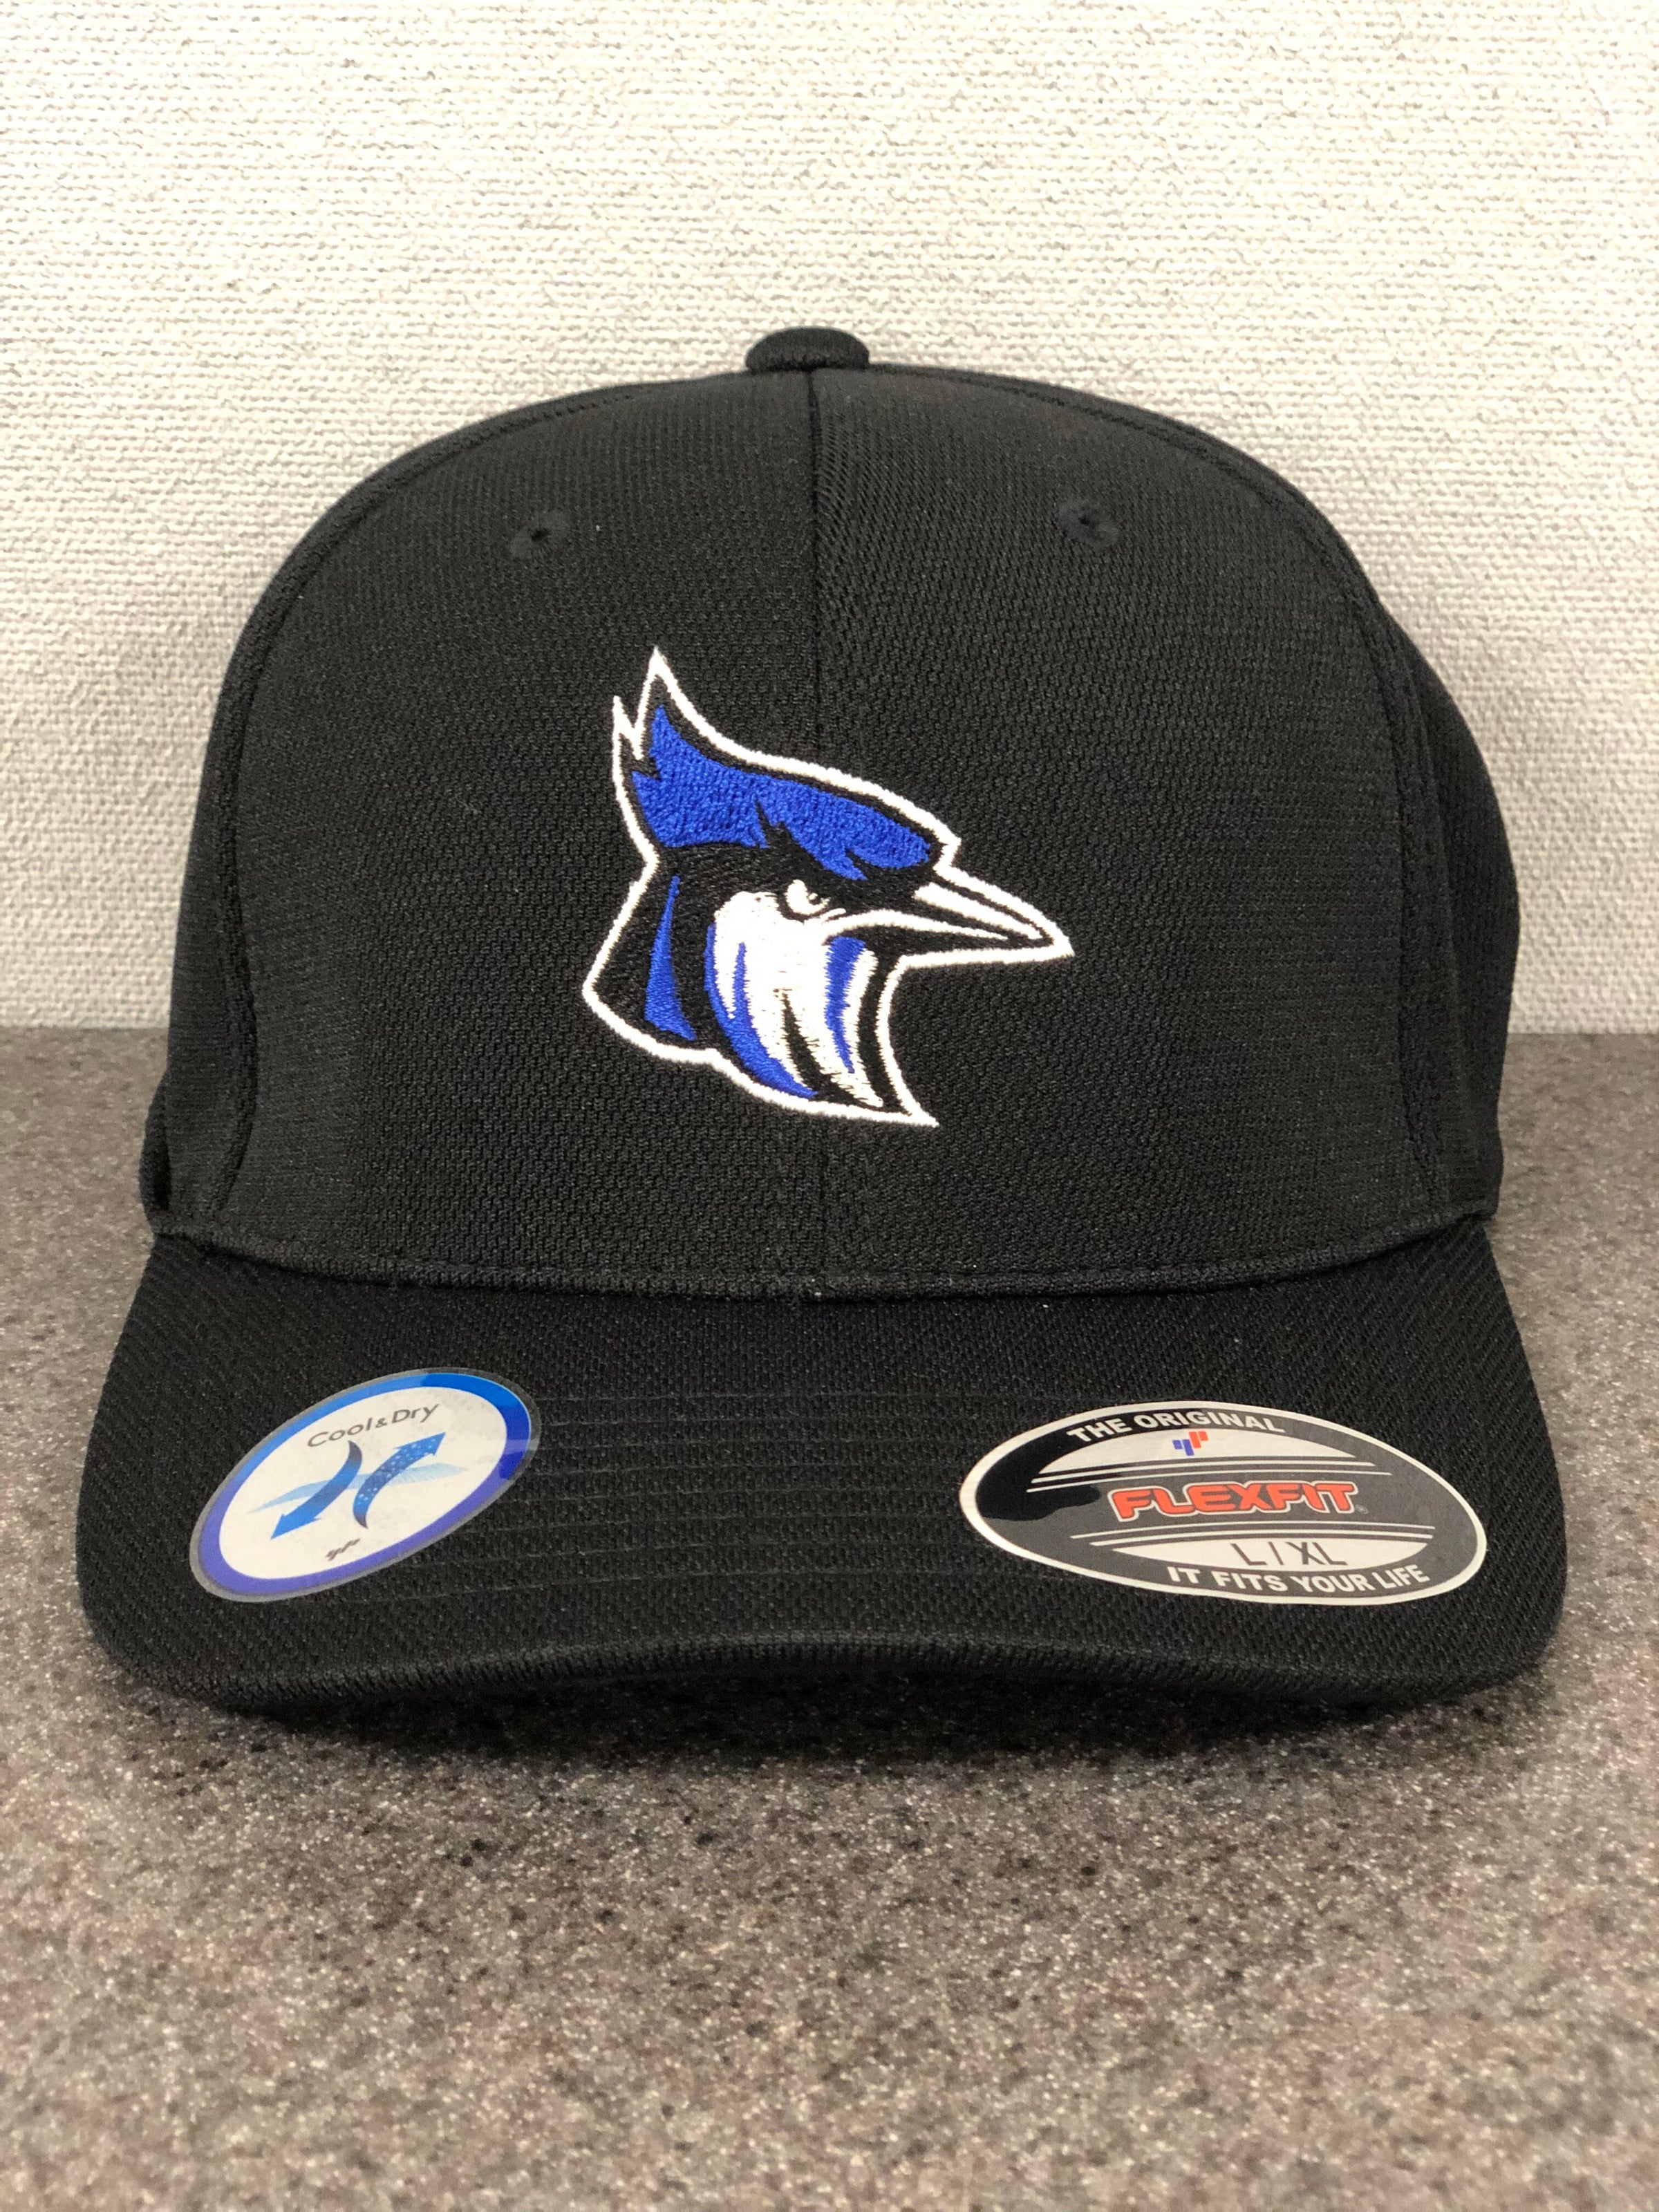 Baseball Cap-Fitted RHS Logo Black